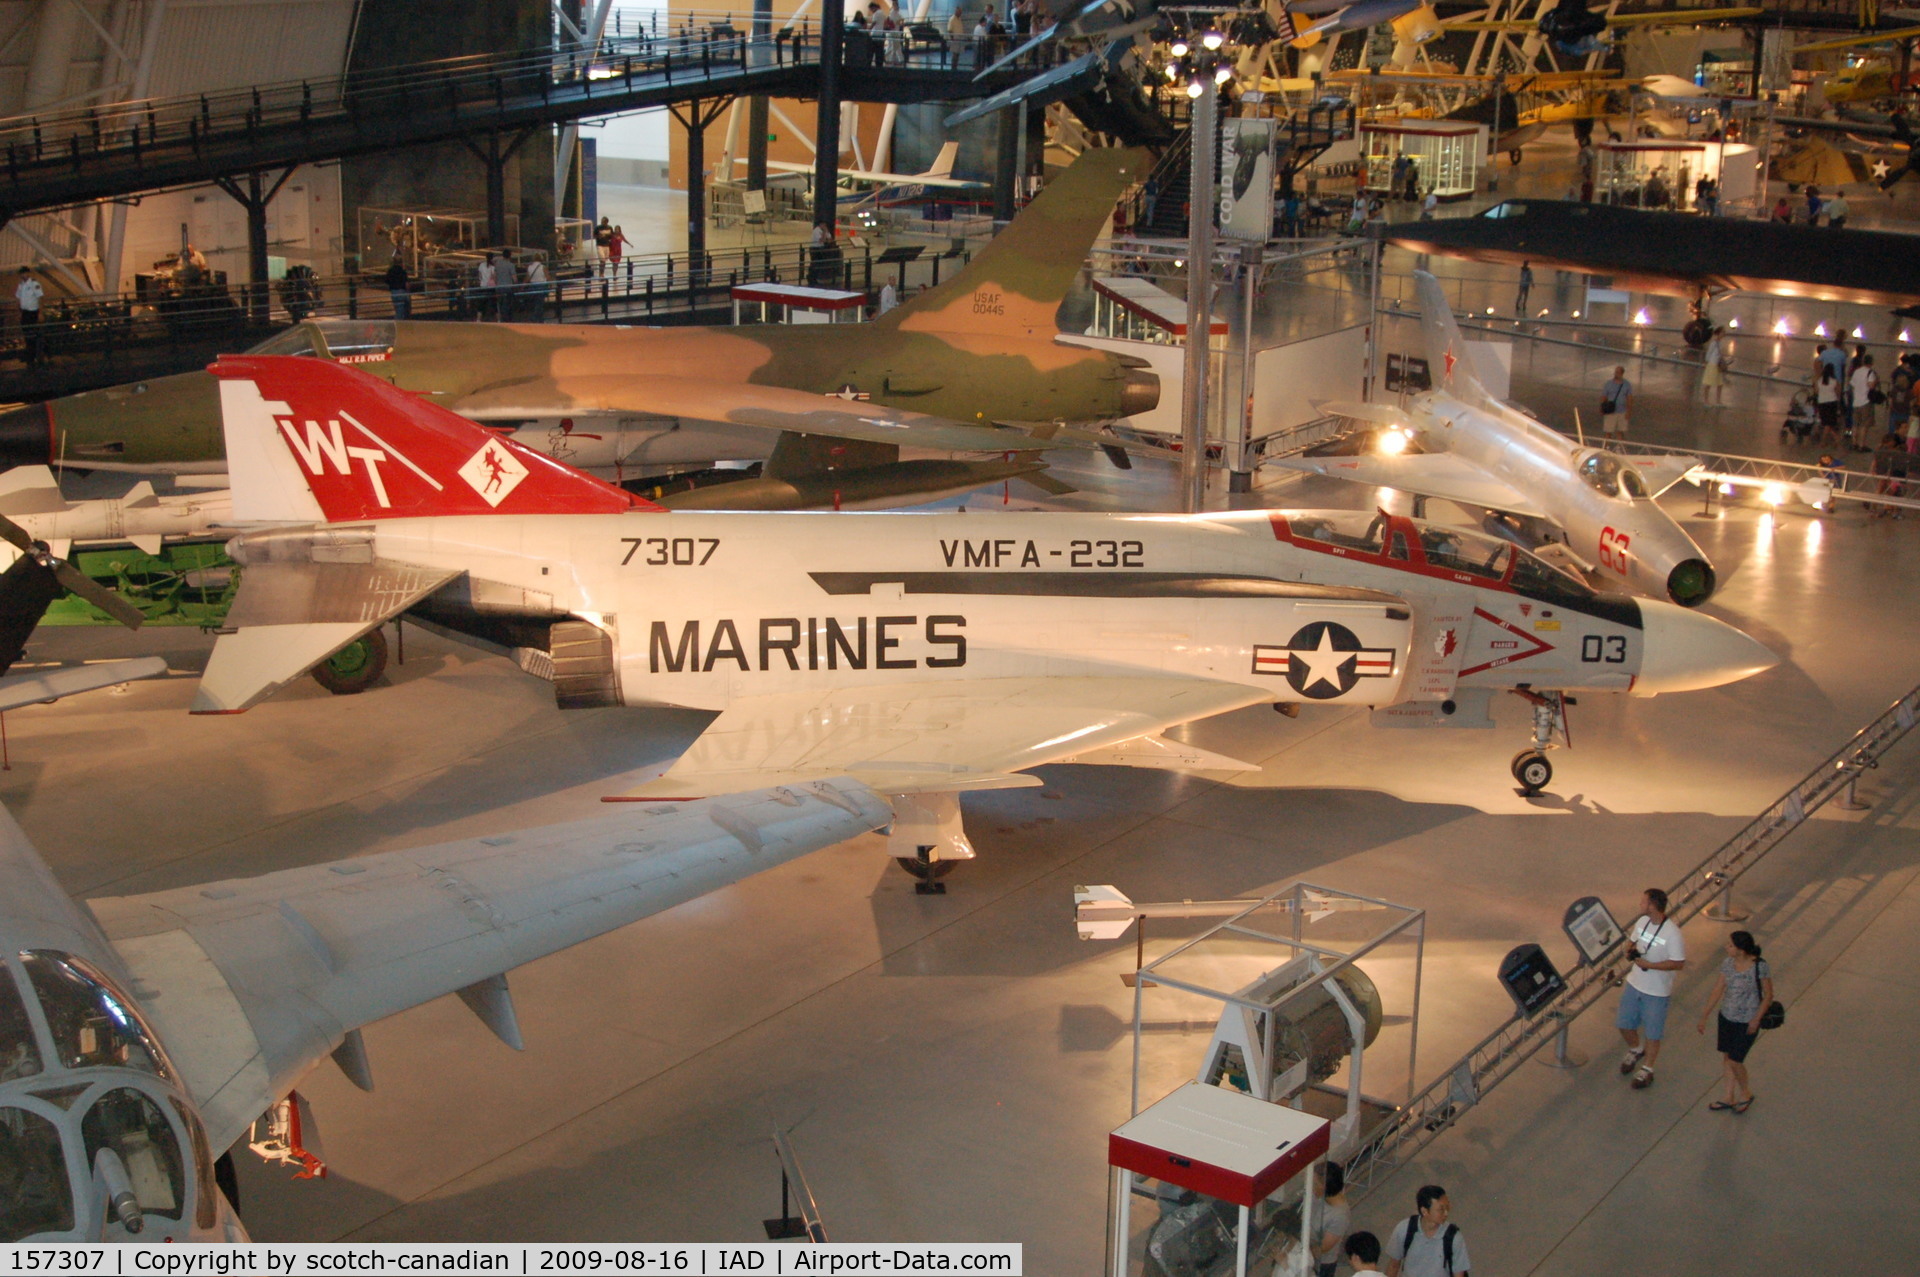 157307, McDonnell F-4J Phantom II C/N 4018, McDonnell F-4S Phantom II at the Steven F. Udvar-Hazy Center, Smithsonian National Air and Space Museum, Chantilly, VA